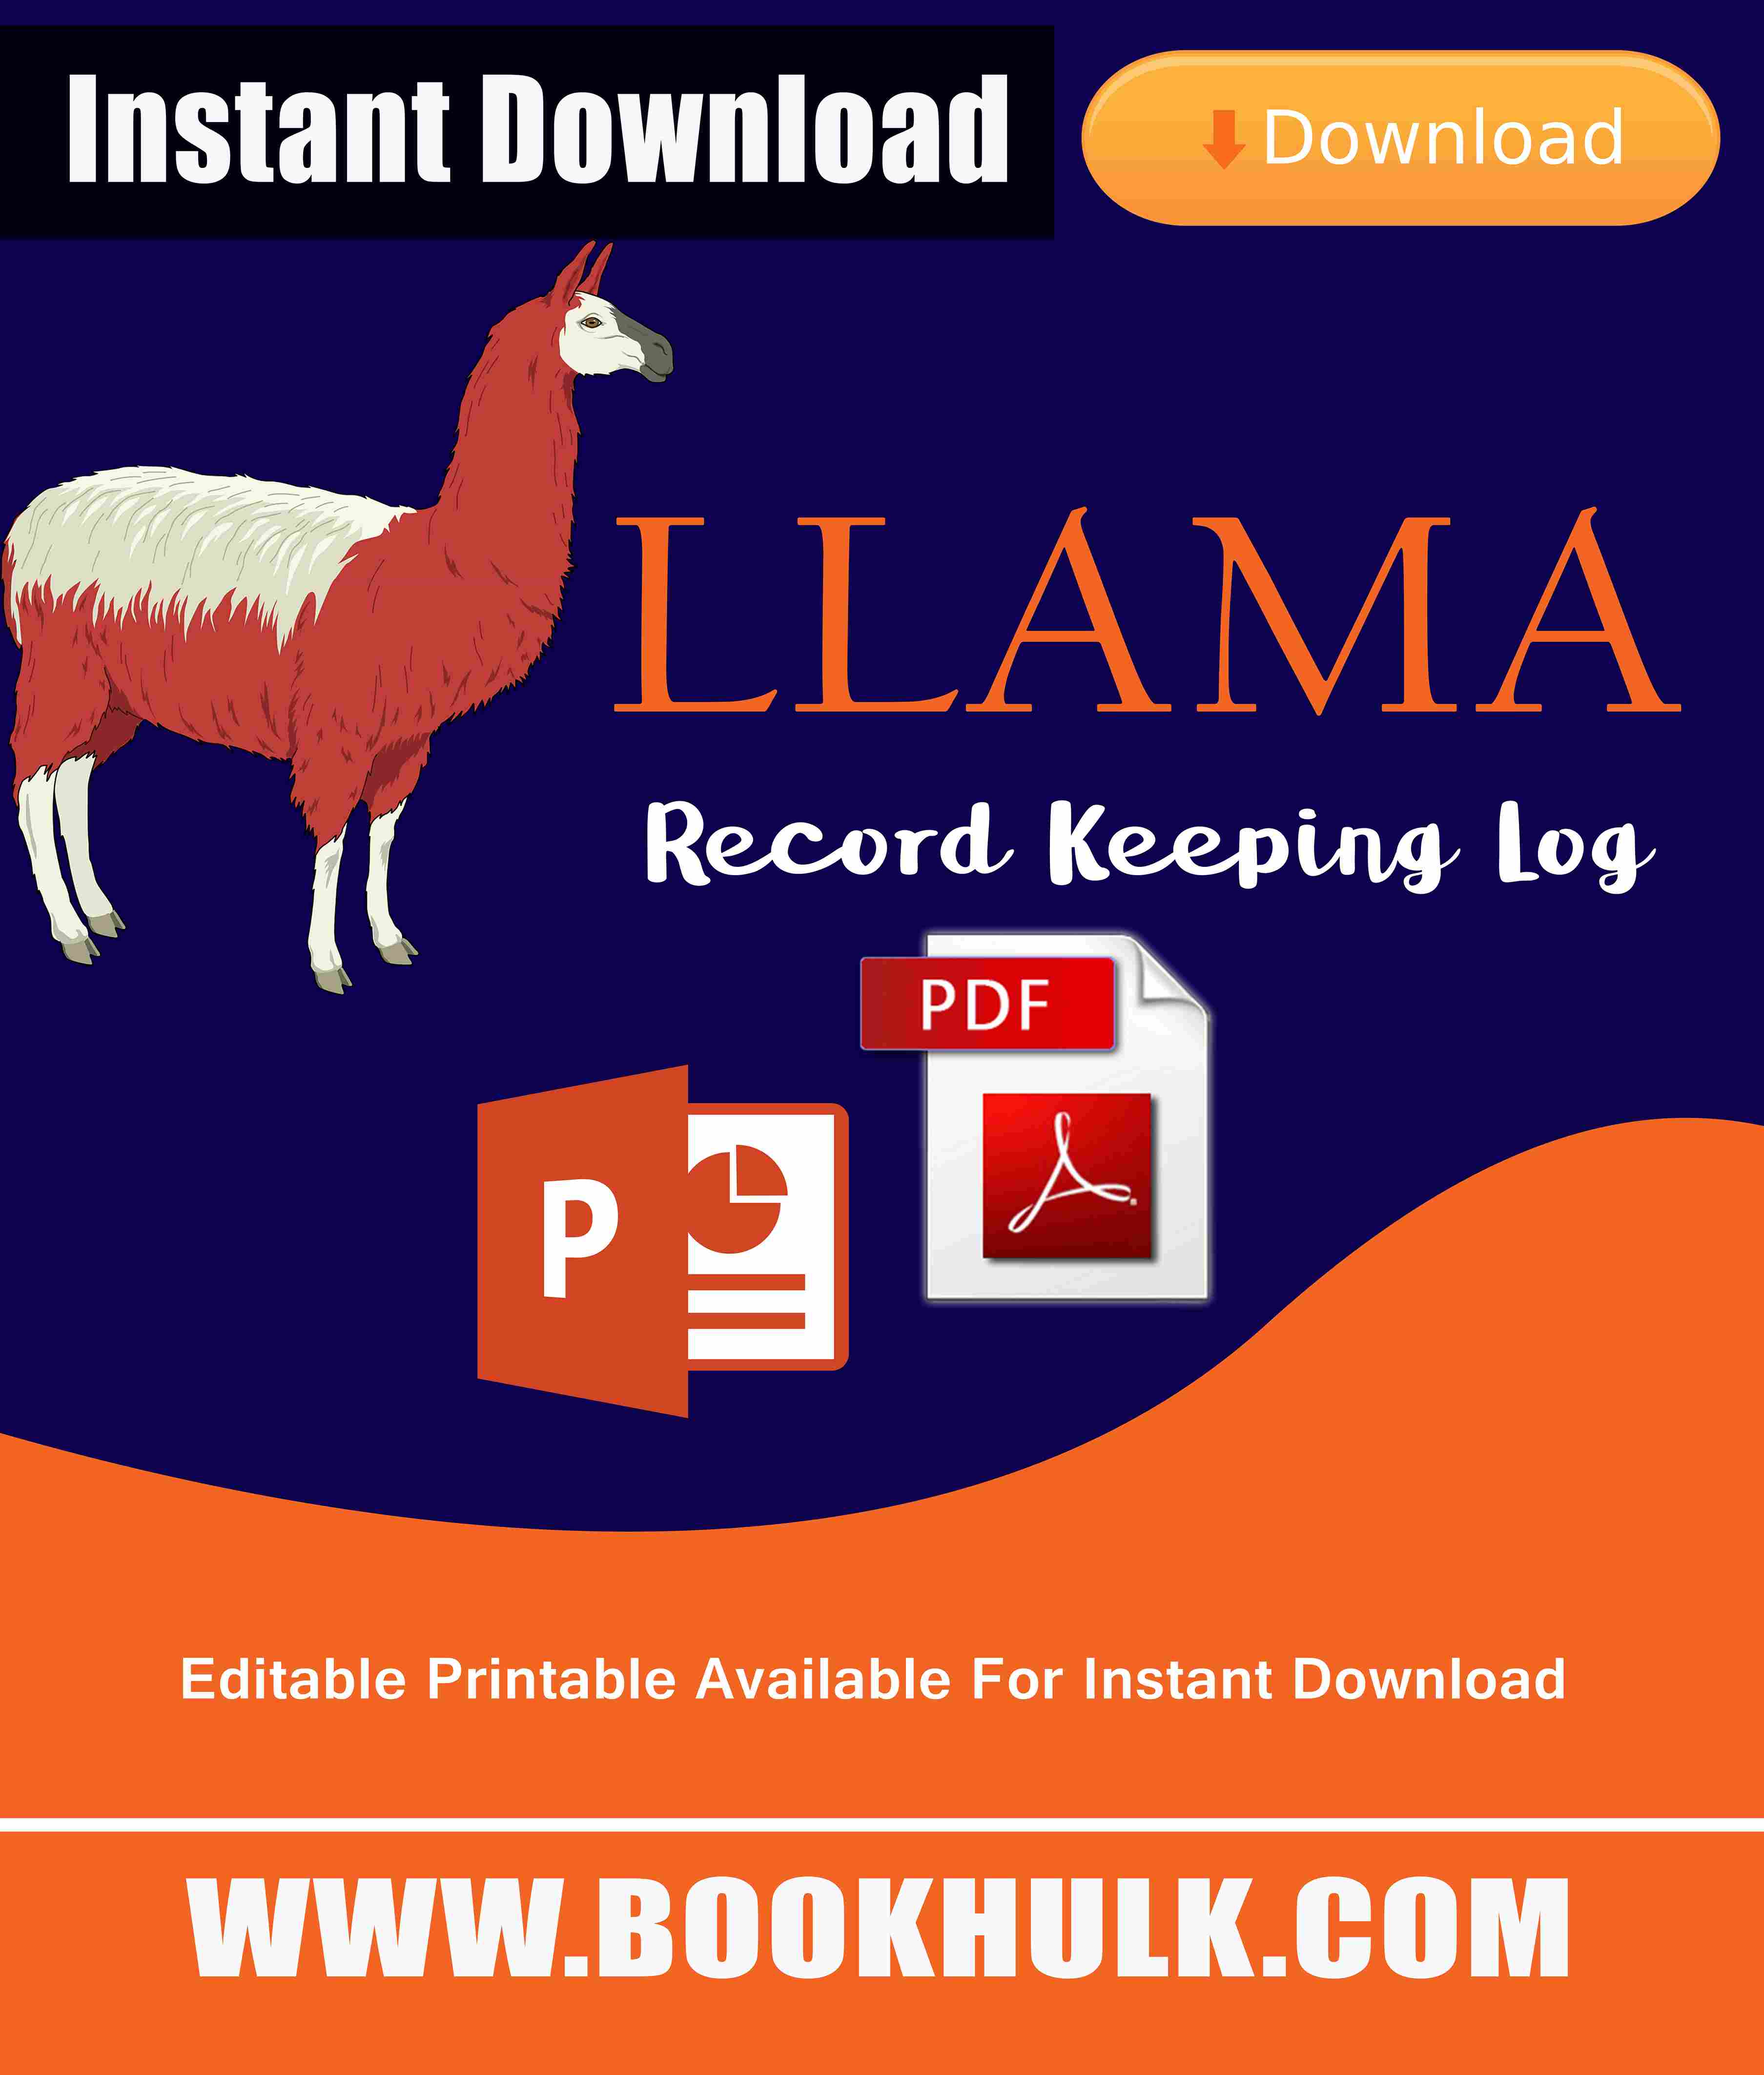 Llama Record Book